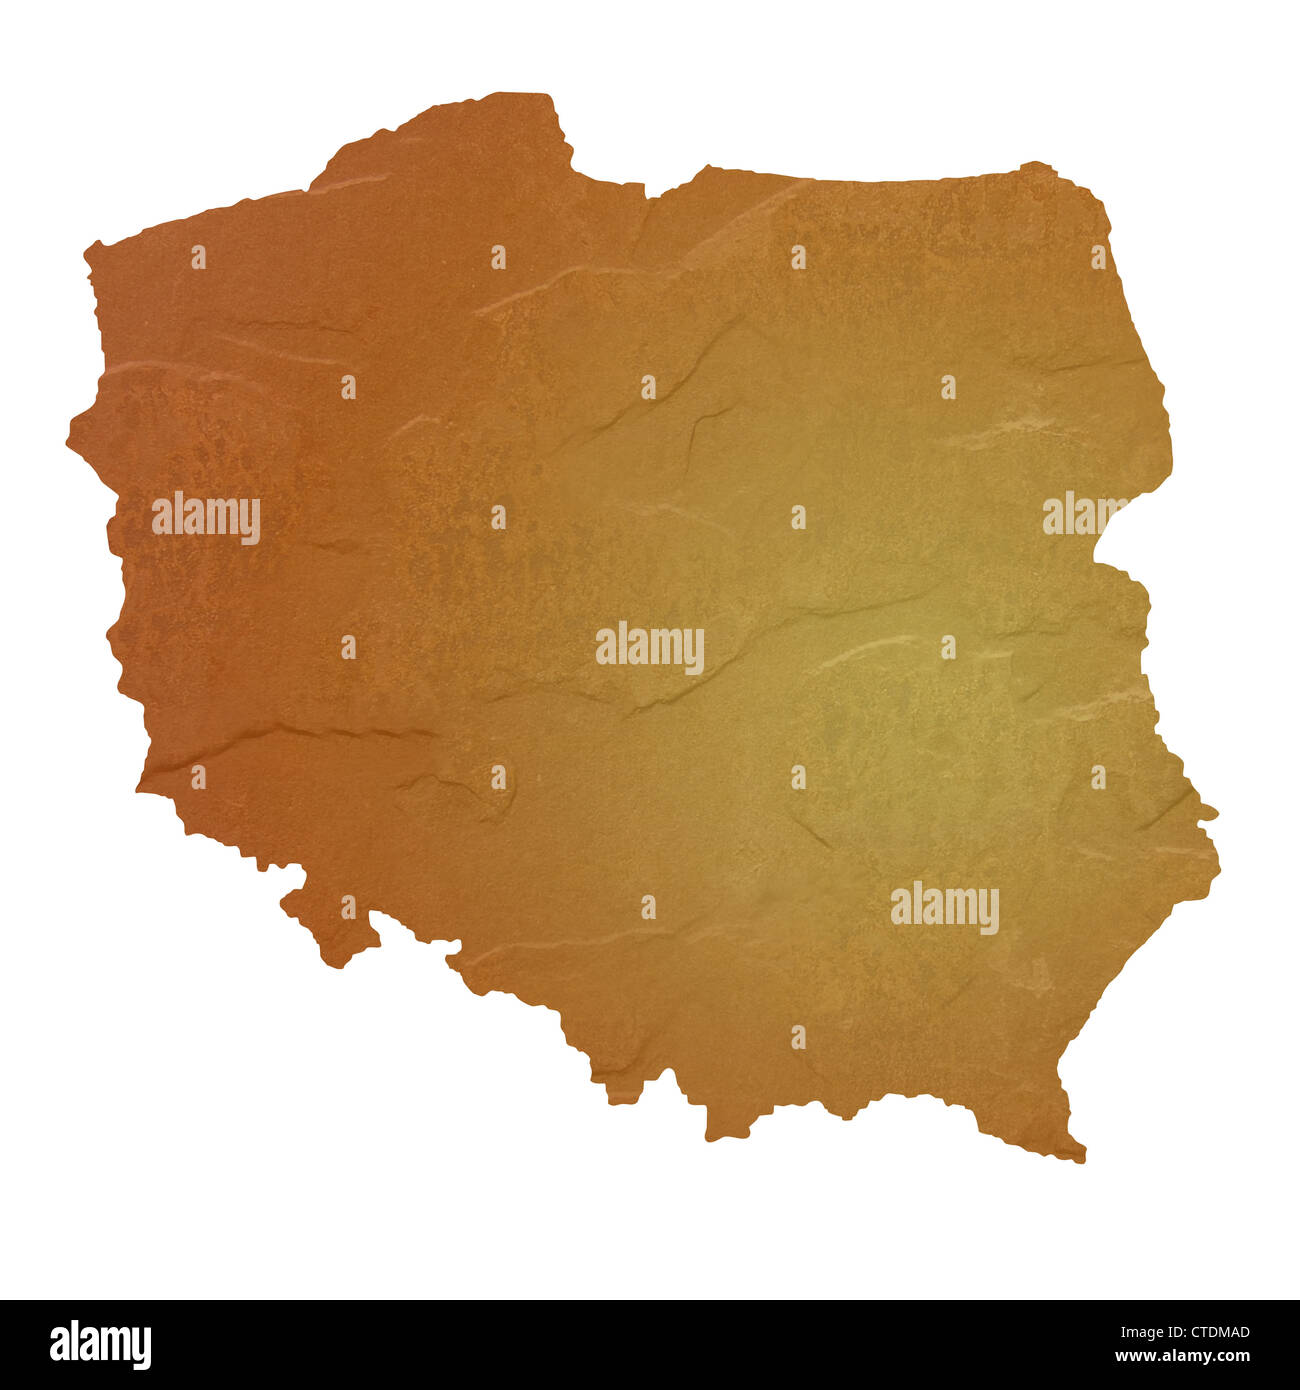 Mapa Mapa de Polonia con textura marrón con textura de roca o piedra, aislado sobre fondo blanco con trazado de recorte. Foto de stock